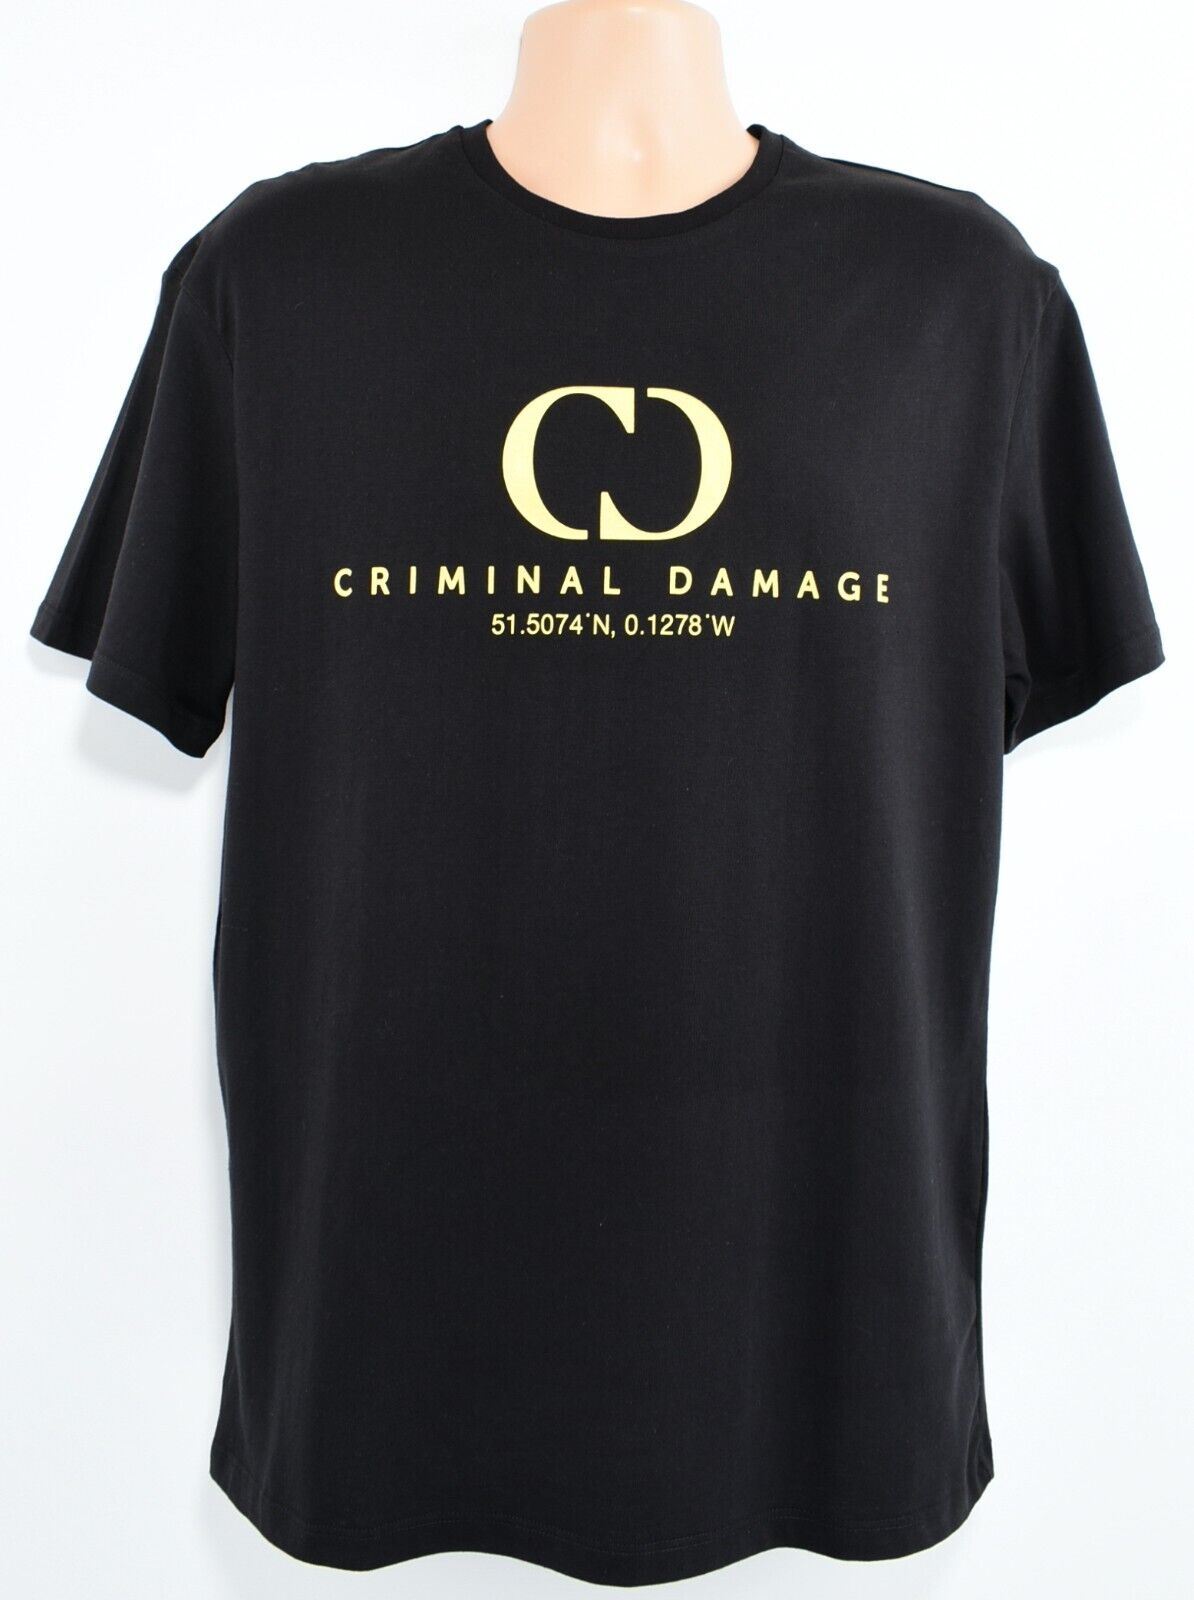 CRIMINAL DAMAGE Men's Short Sleeve T-shirt, Black with Yellow Logo, size SMALL